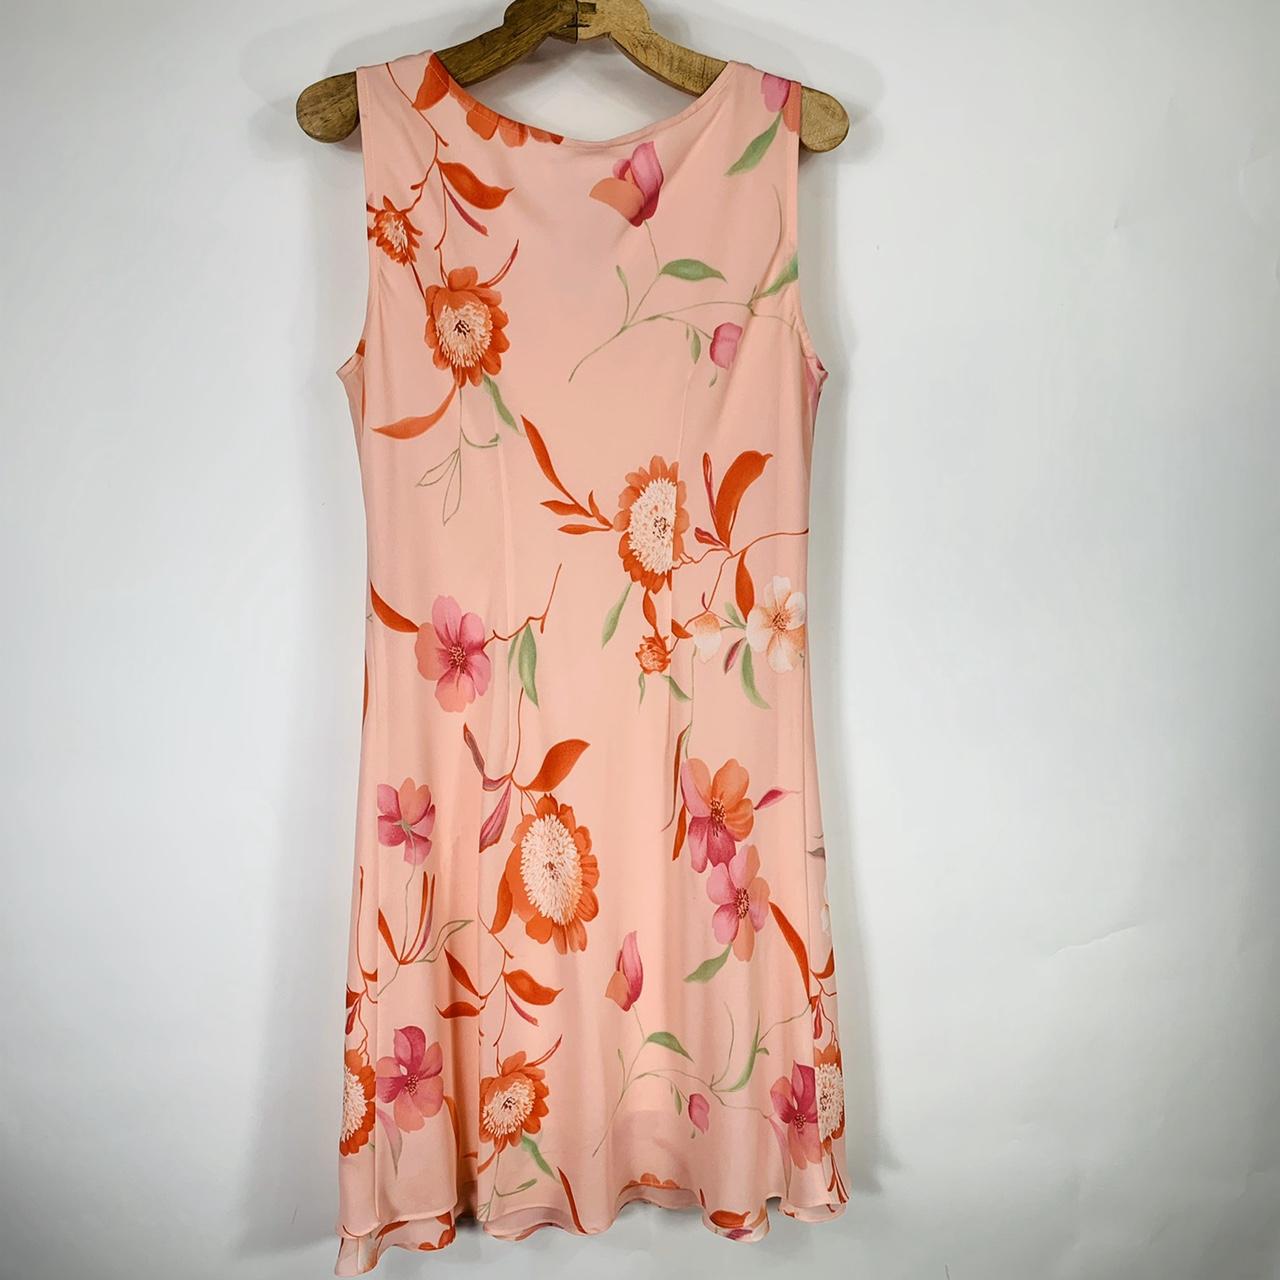 American Vintage Women's Pink Dress | Depop